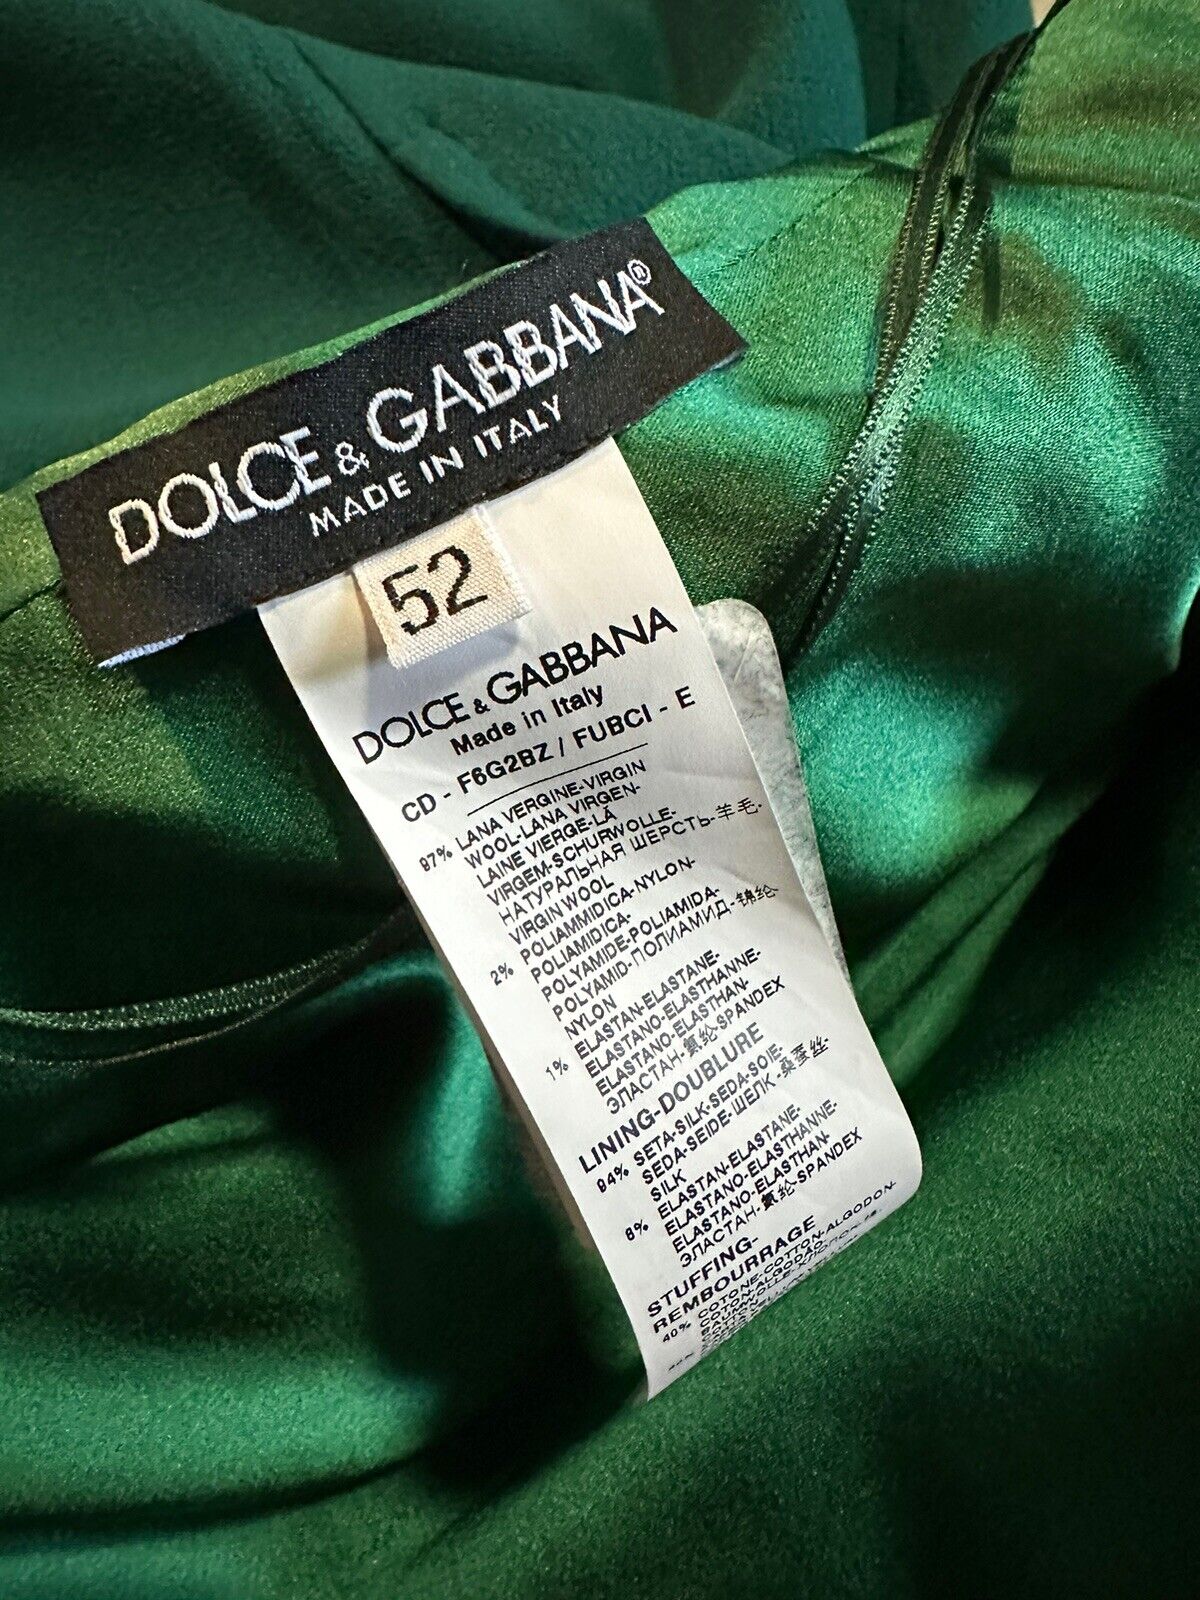 New $2645 DOLCE&GABBANA Hunter Virgin Wool Blend Sheath Midi Dress Green 52It/18